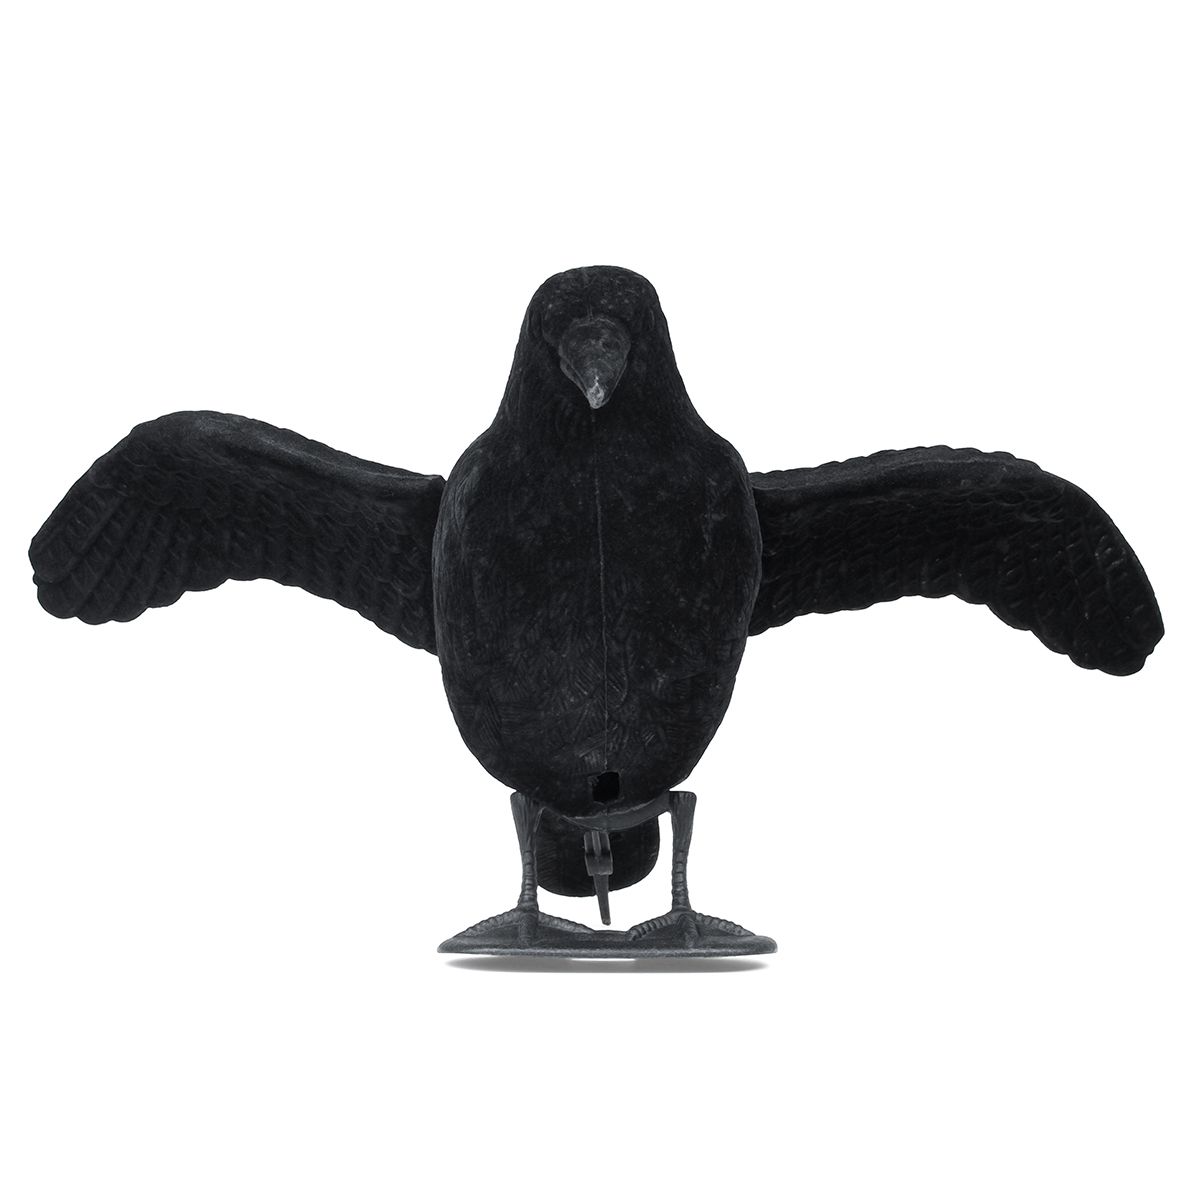 Crow-Hunting-Decoy-Scare-Bird-Away-Scarecrow-Realistic-Animal-Scarer-Decoration-1623933